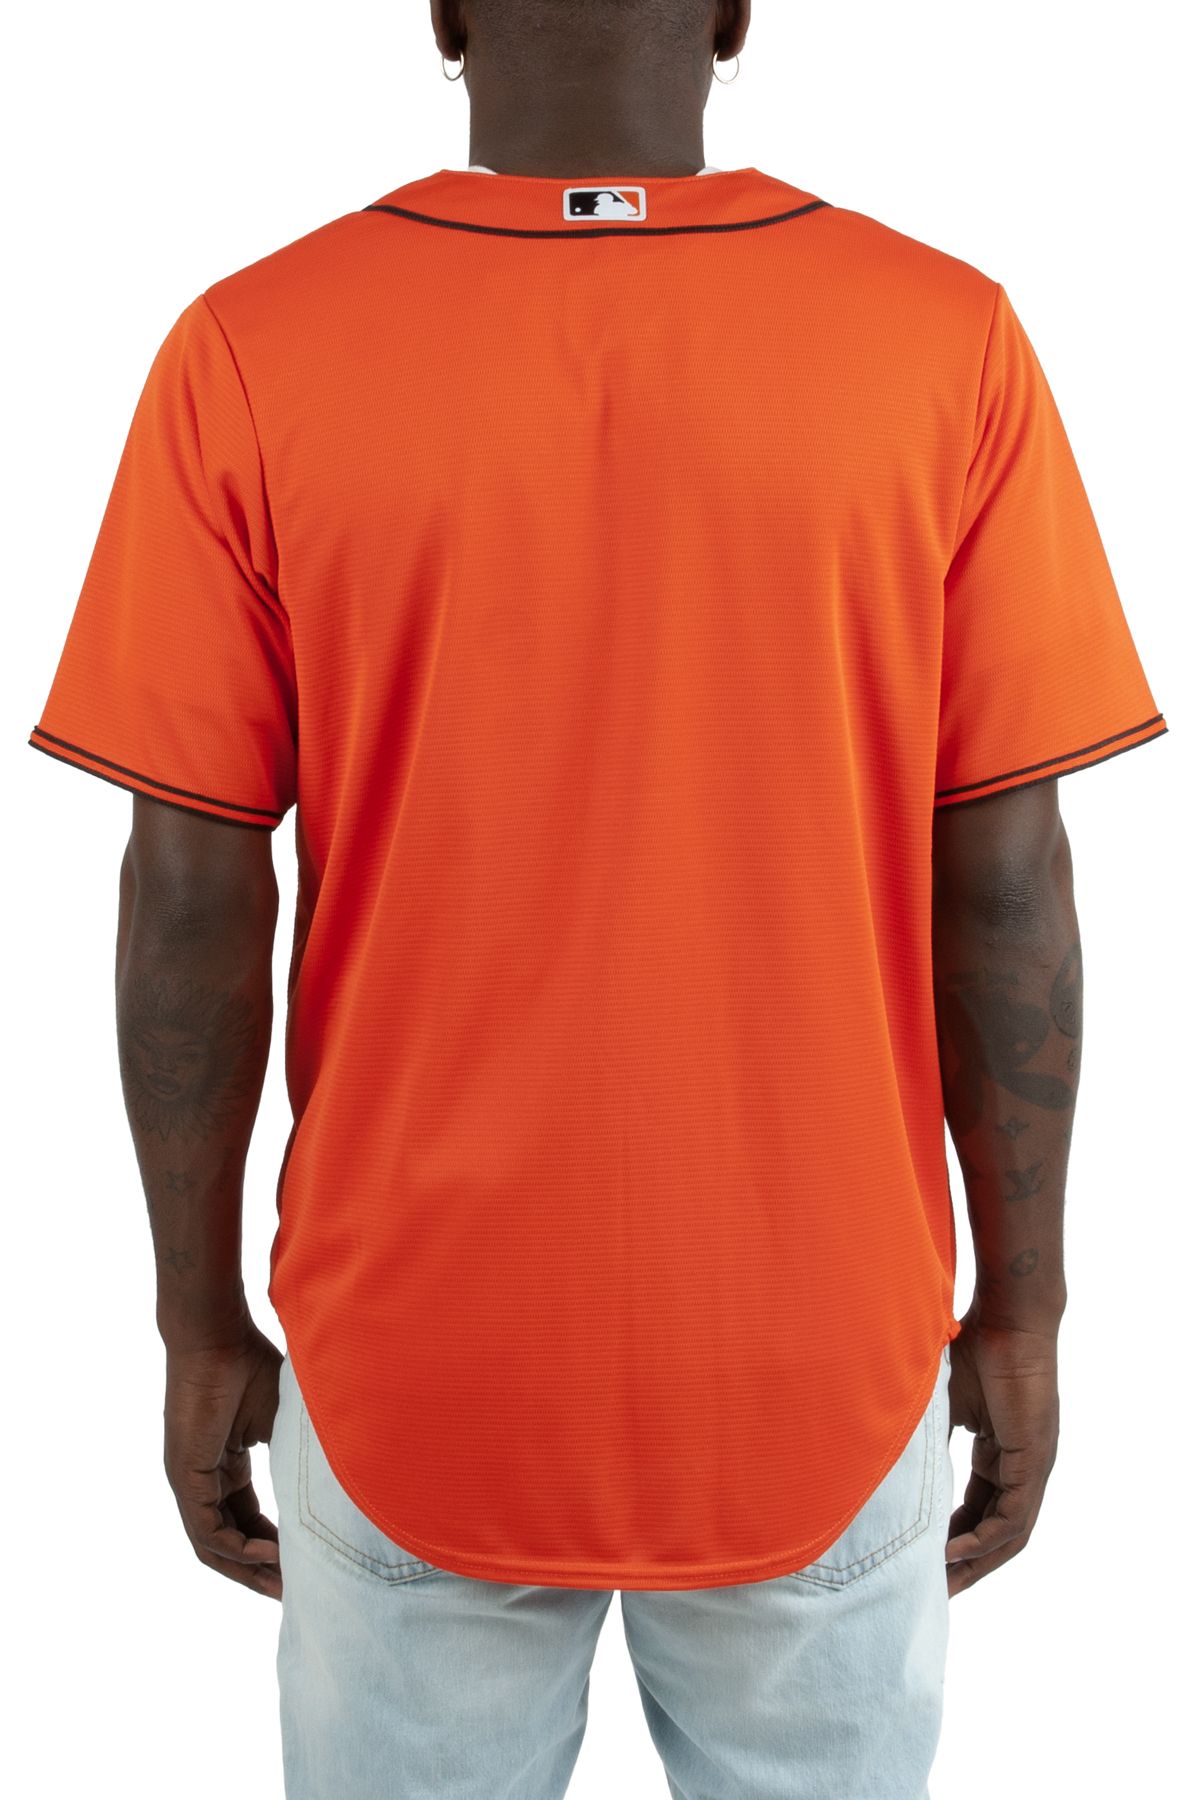 San Francisco Giants Nike Alternate Replica Team Jersey - Orange